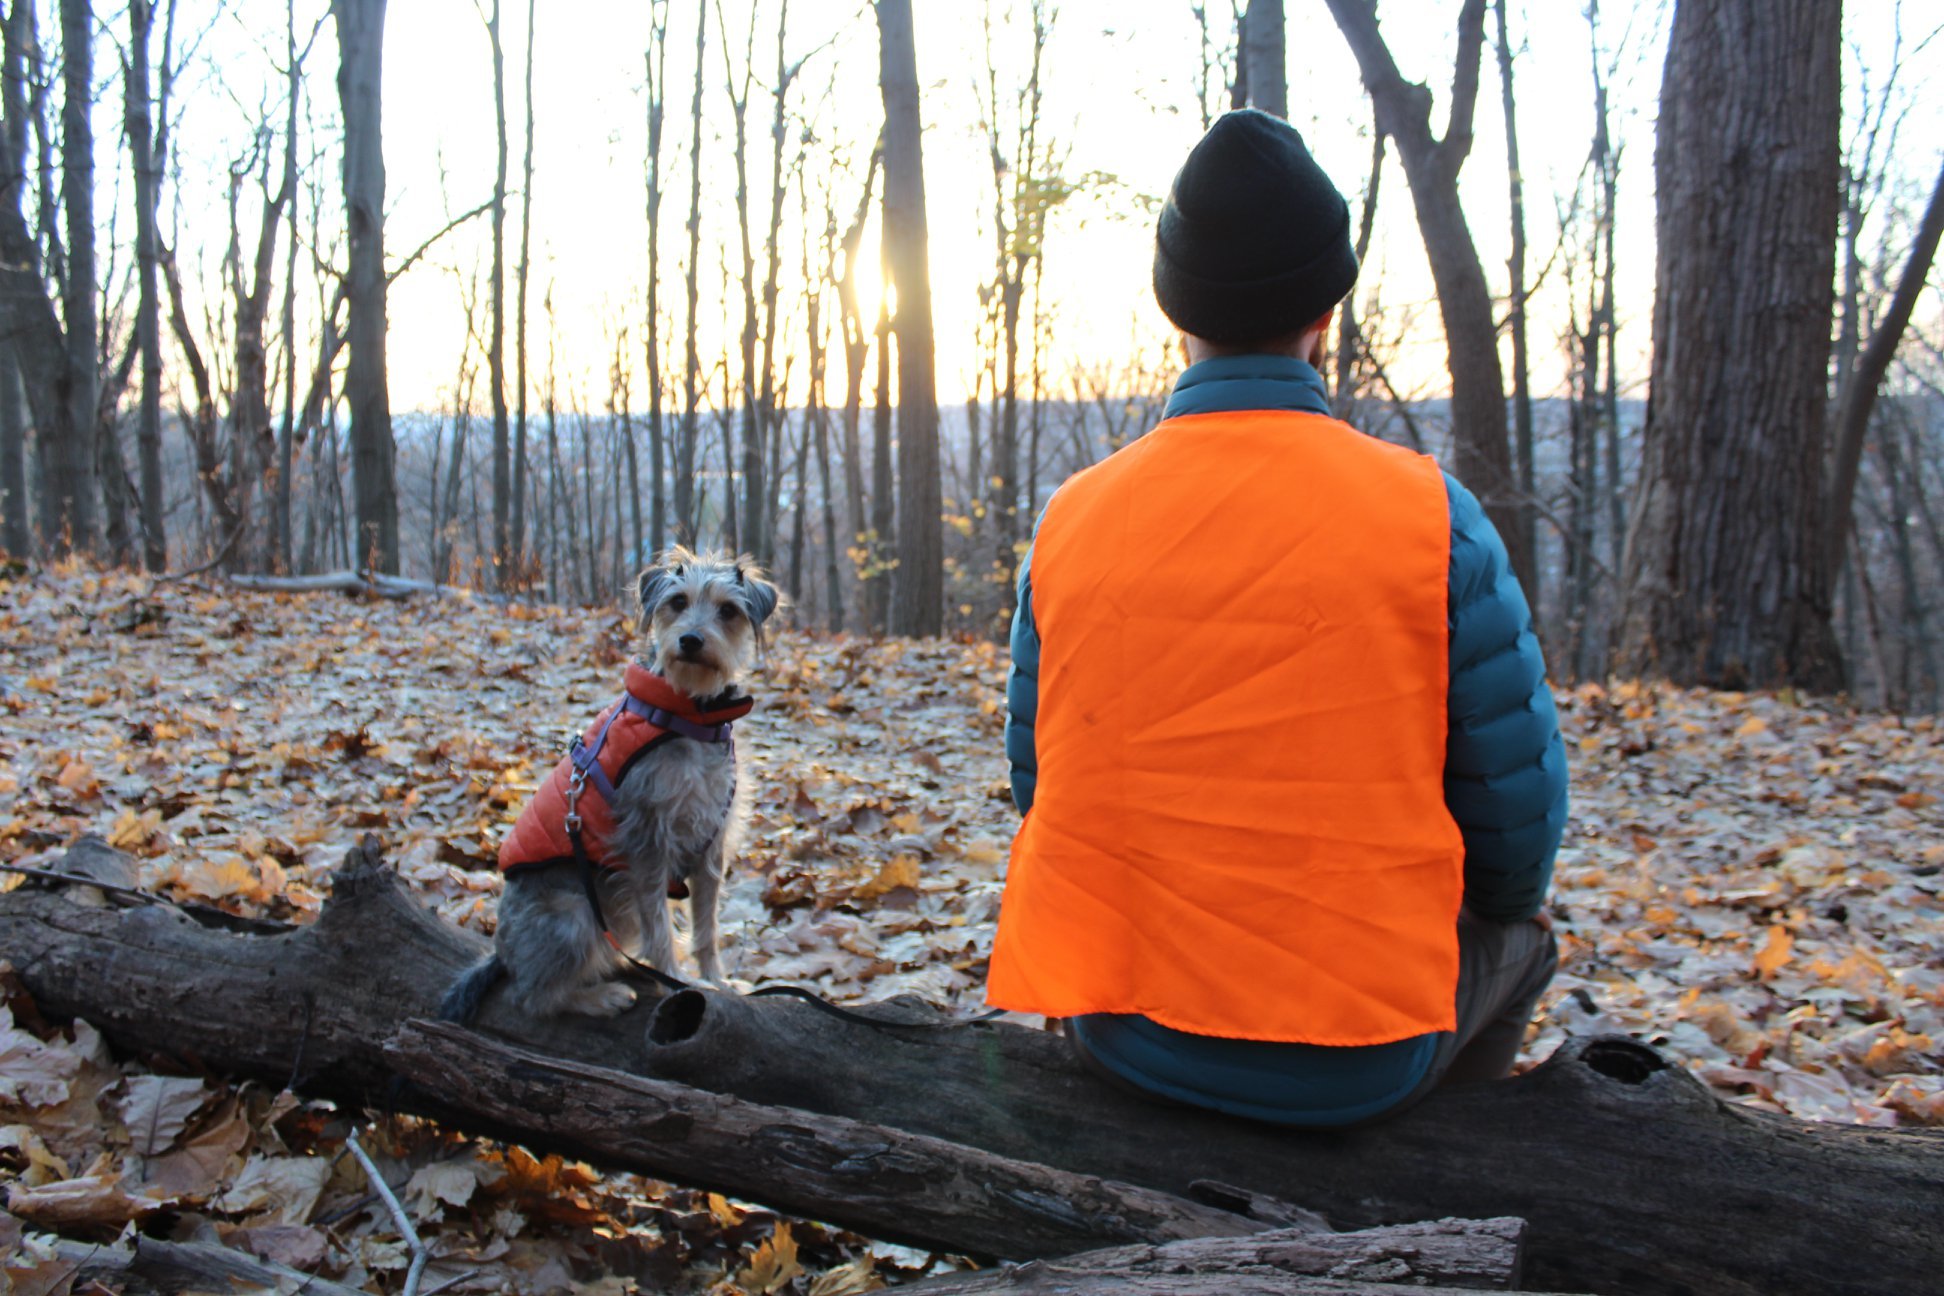 A hiker and their dog hiking partner resting on a log wearing blaze orange